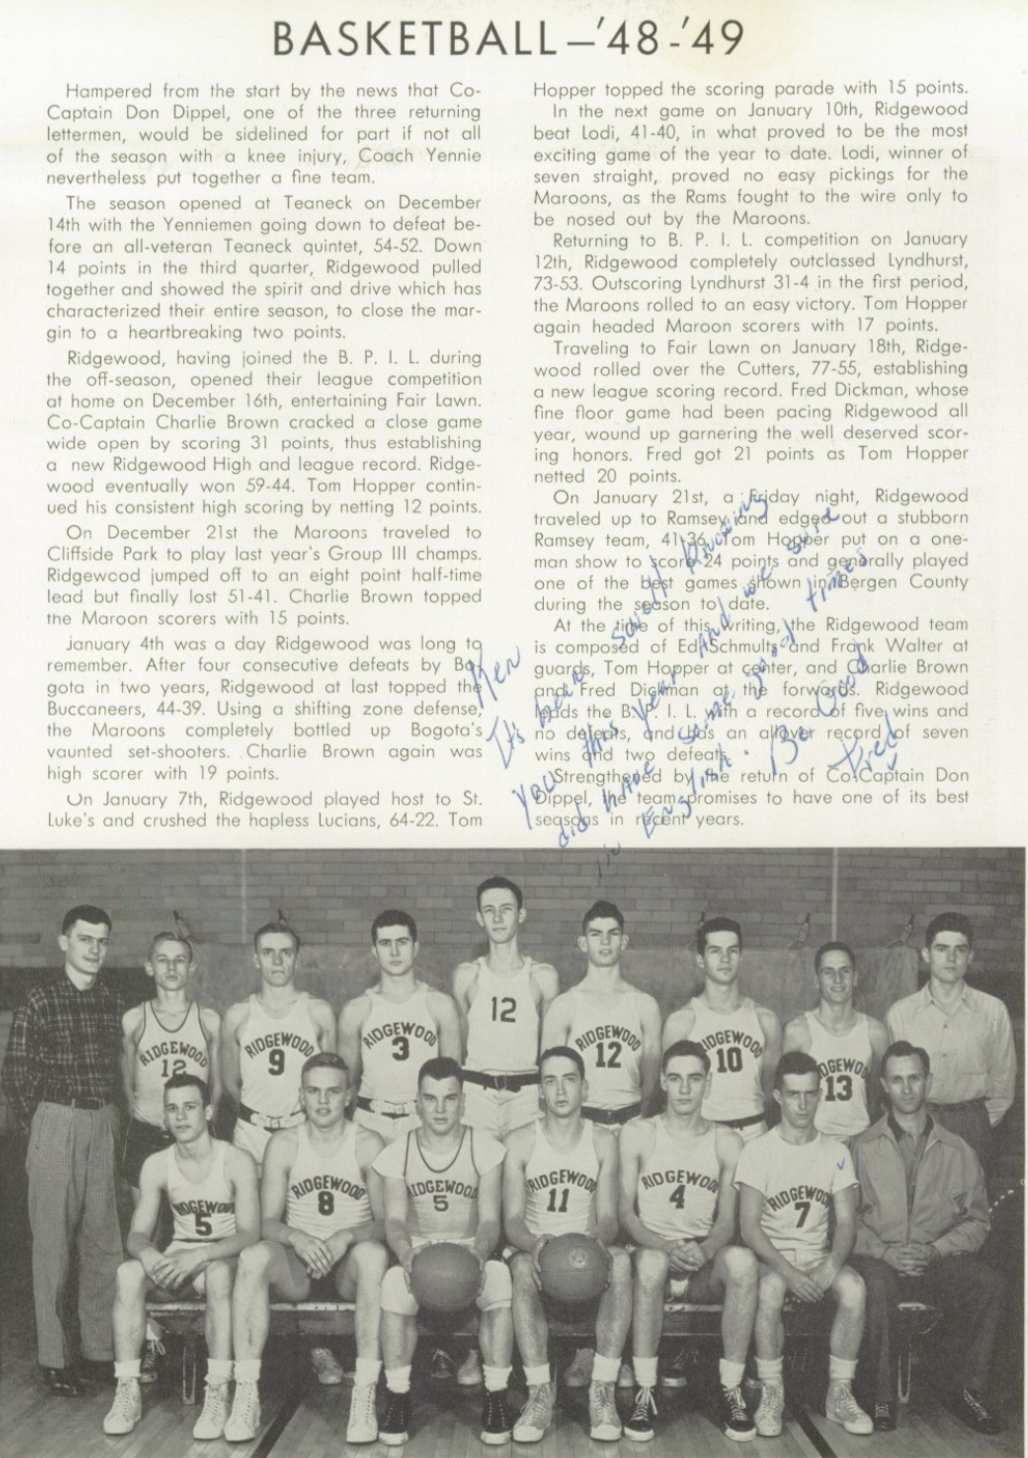 1949 Boys’ Basketball Team